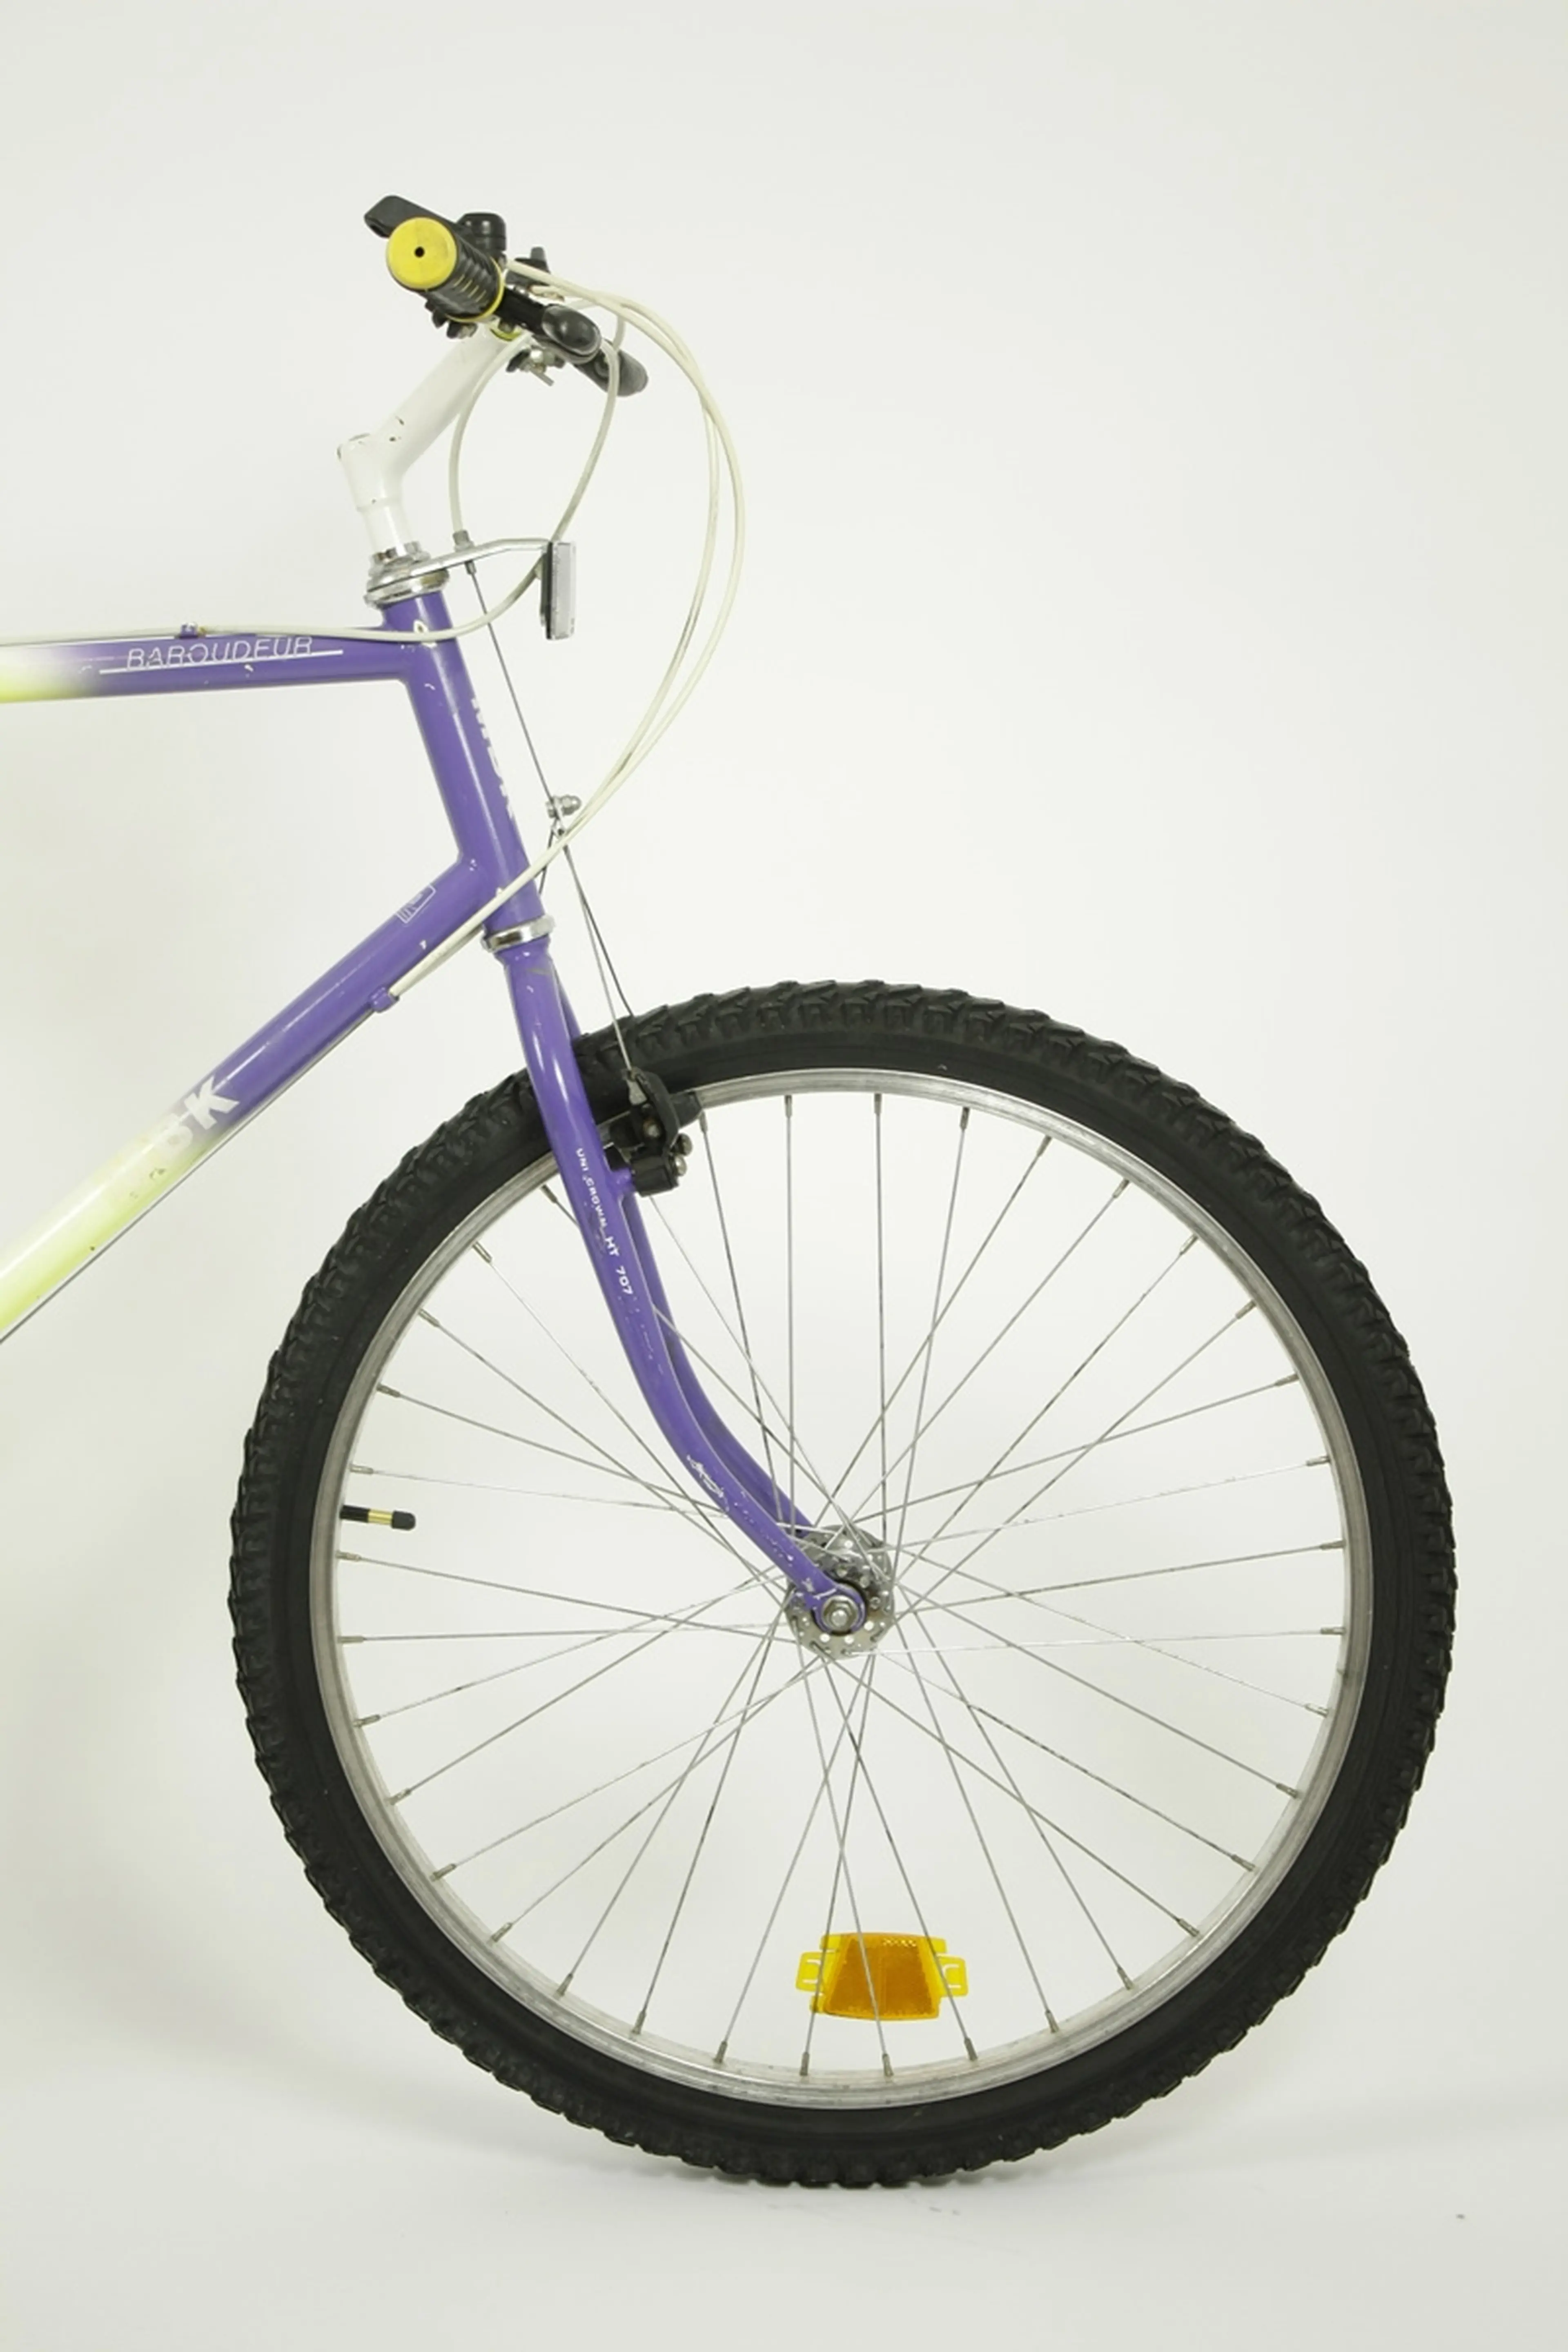 4. Bicicleta MBK Reconditionata